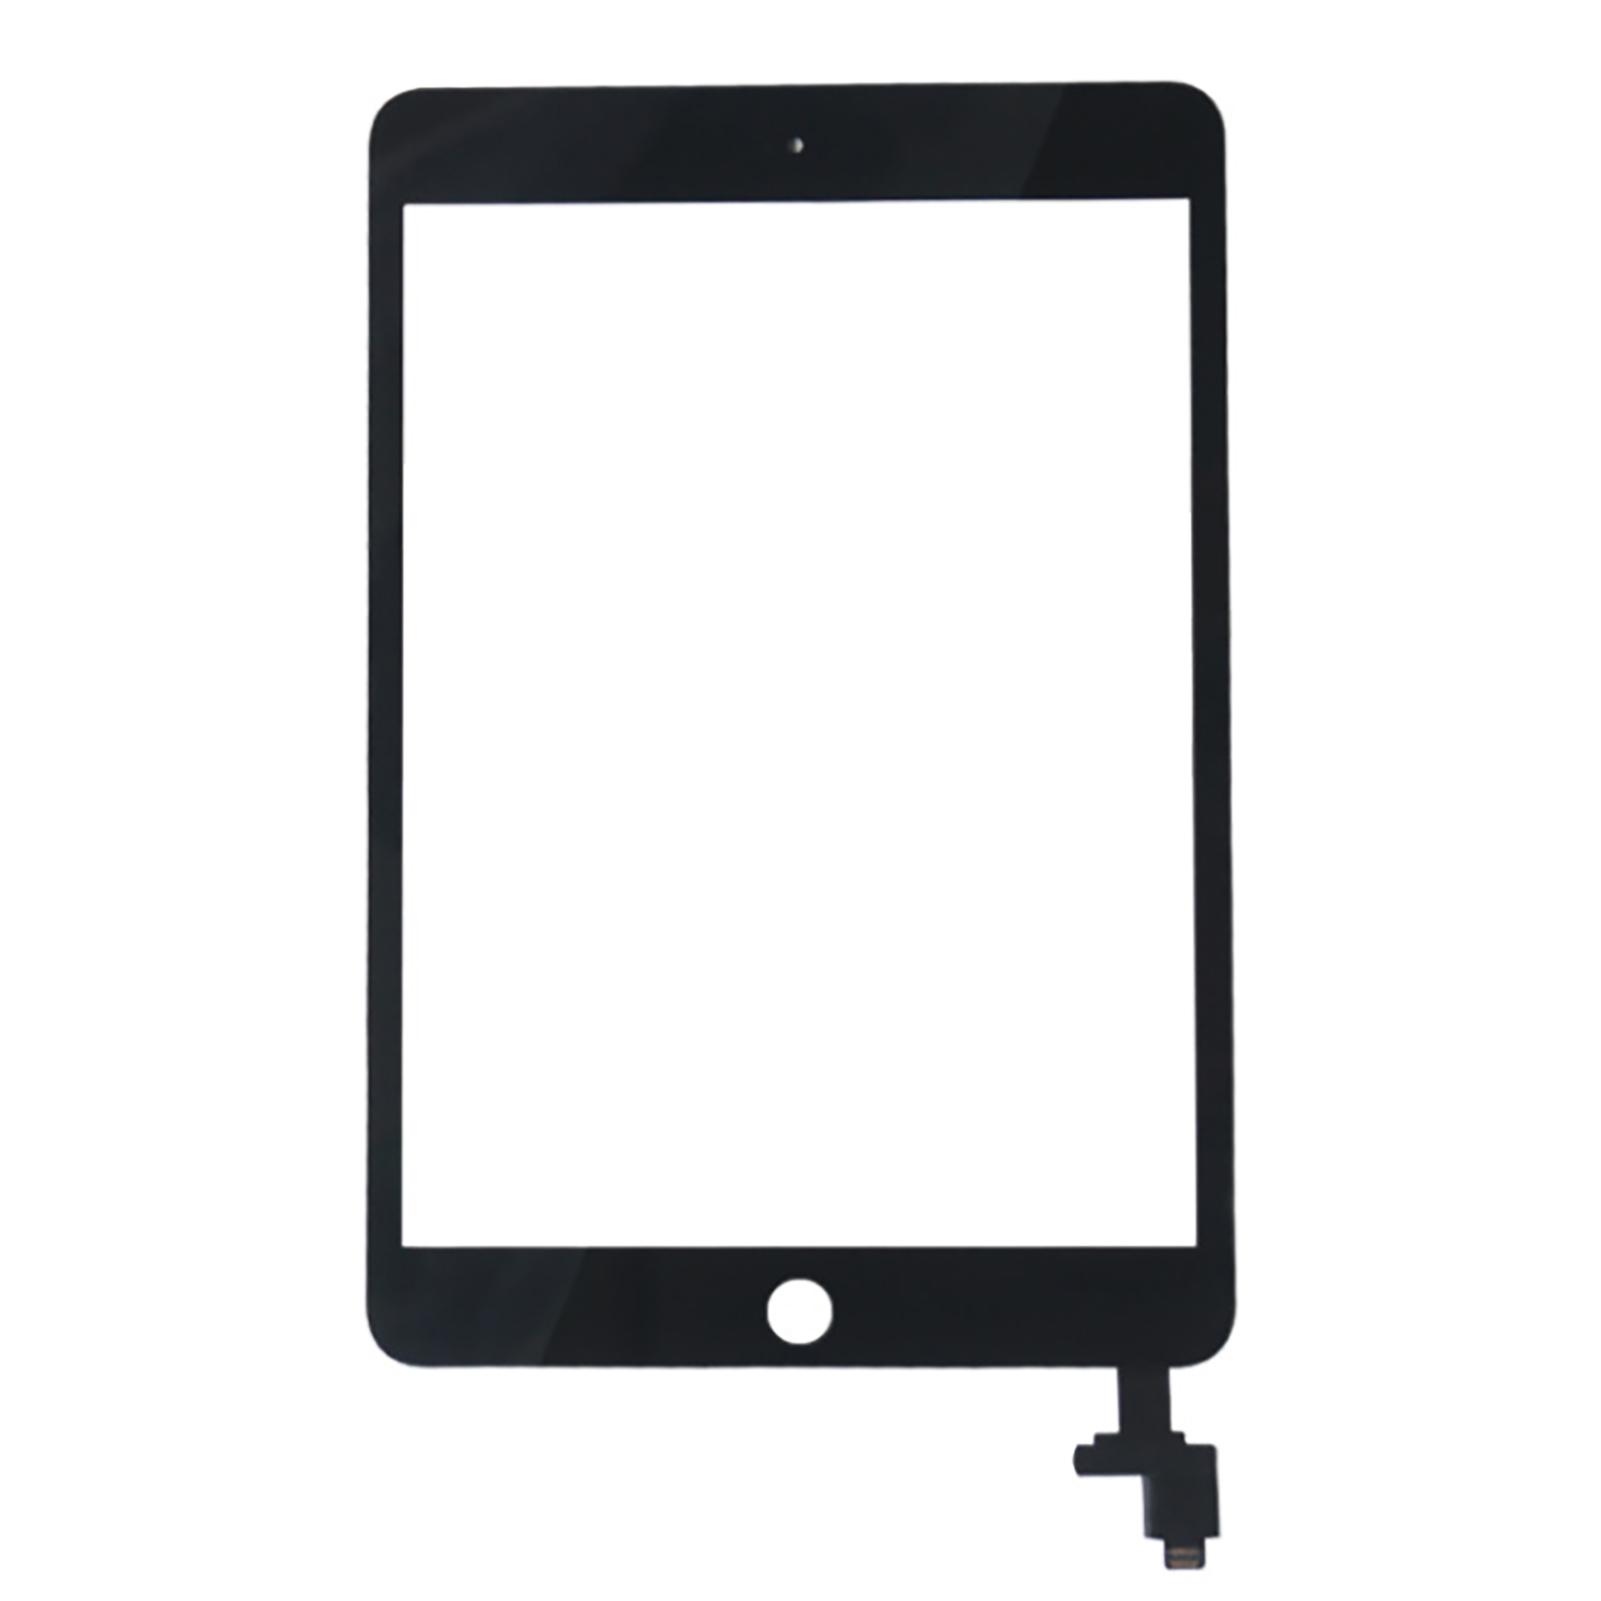 Изображение товара: Сенсорный экран для iPad Mini3, дигитайзер без кнопки Home, сменная сенсорная панель для ipad mini 3 A1599 A1600